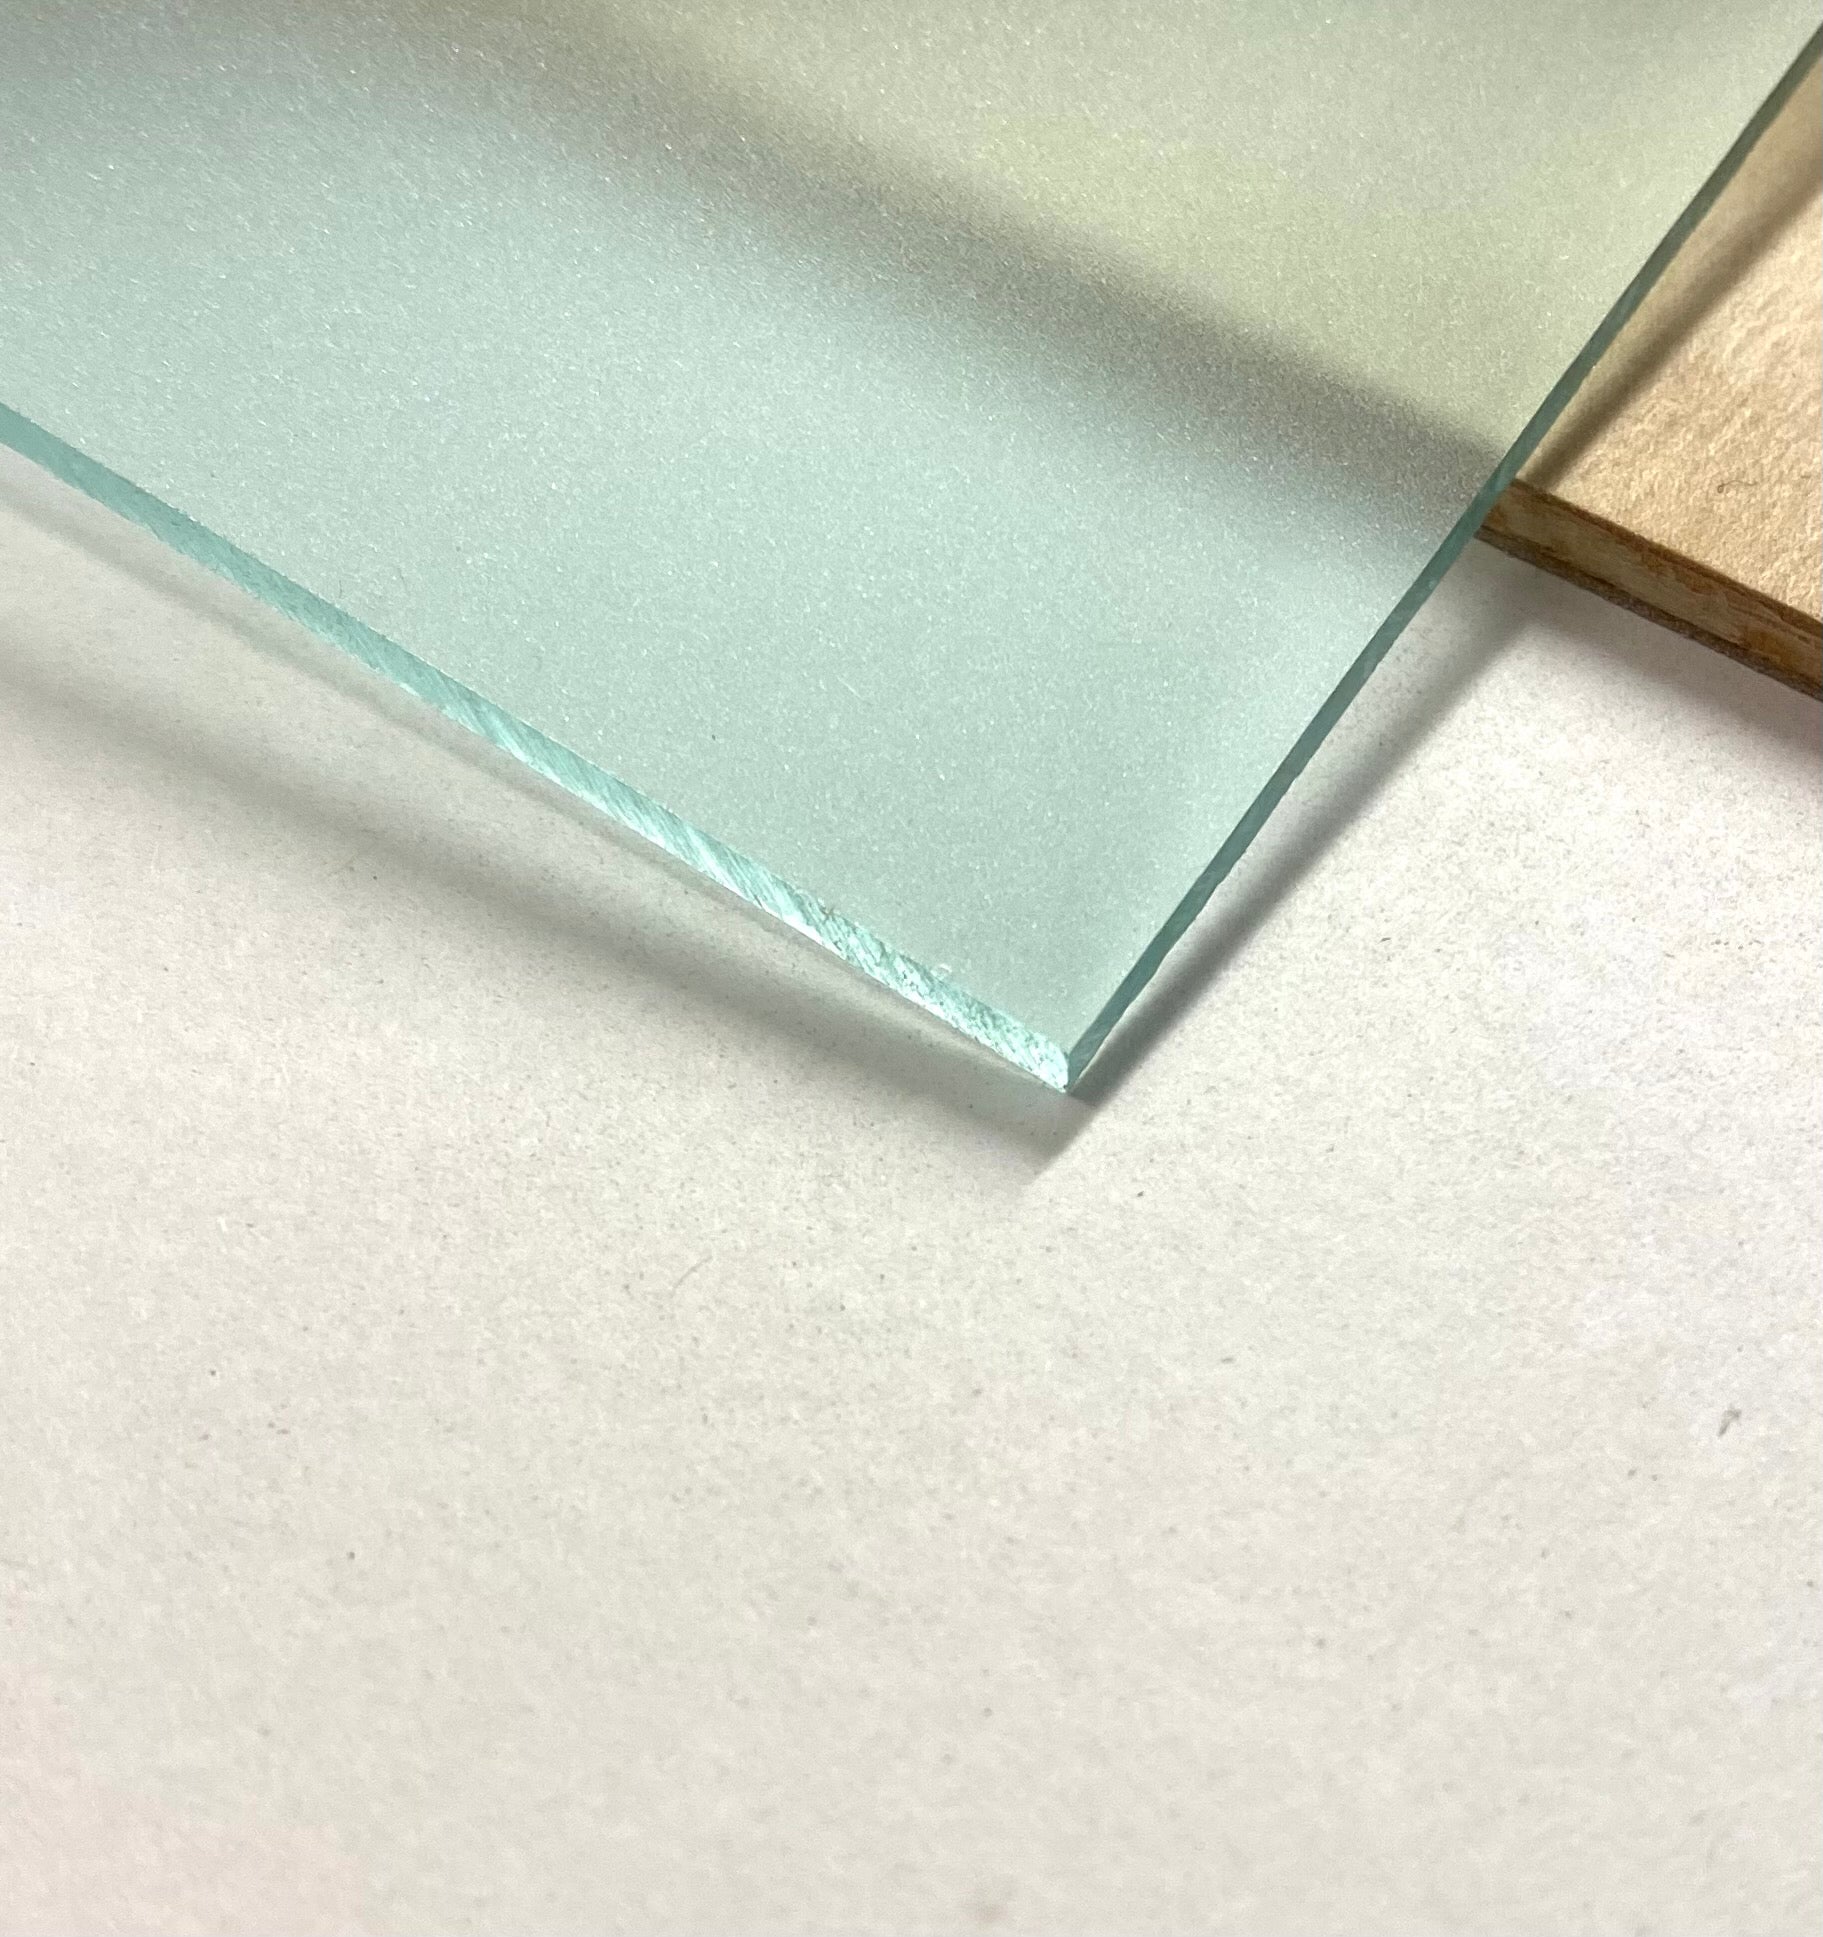 clear glass sheet 10mm,best price clear glass sheet 10mm, 10mm